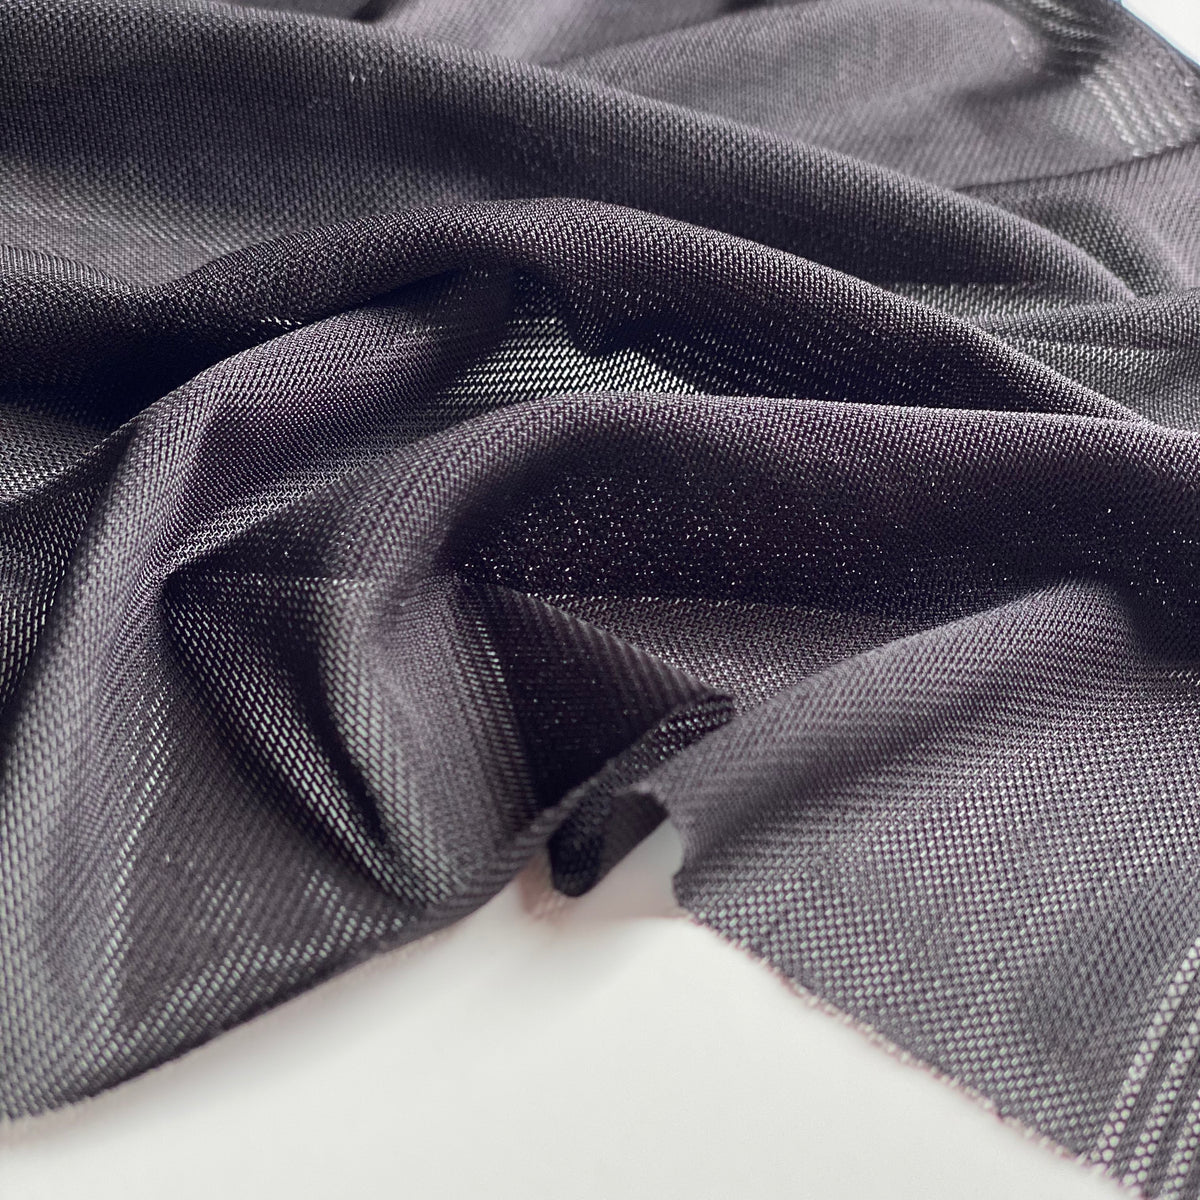 Swimsuit Lining Fabric - Black - Priced per 0.5 metre